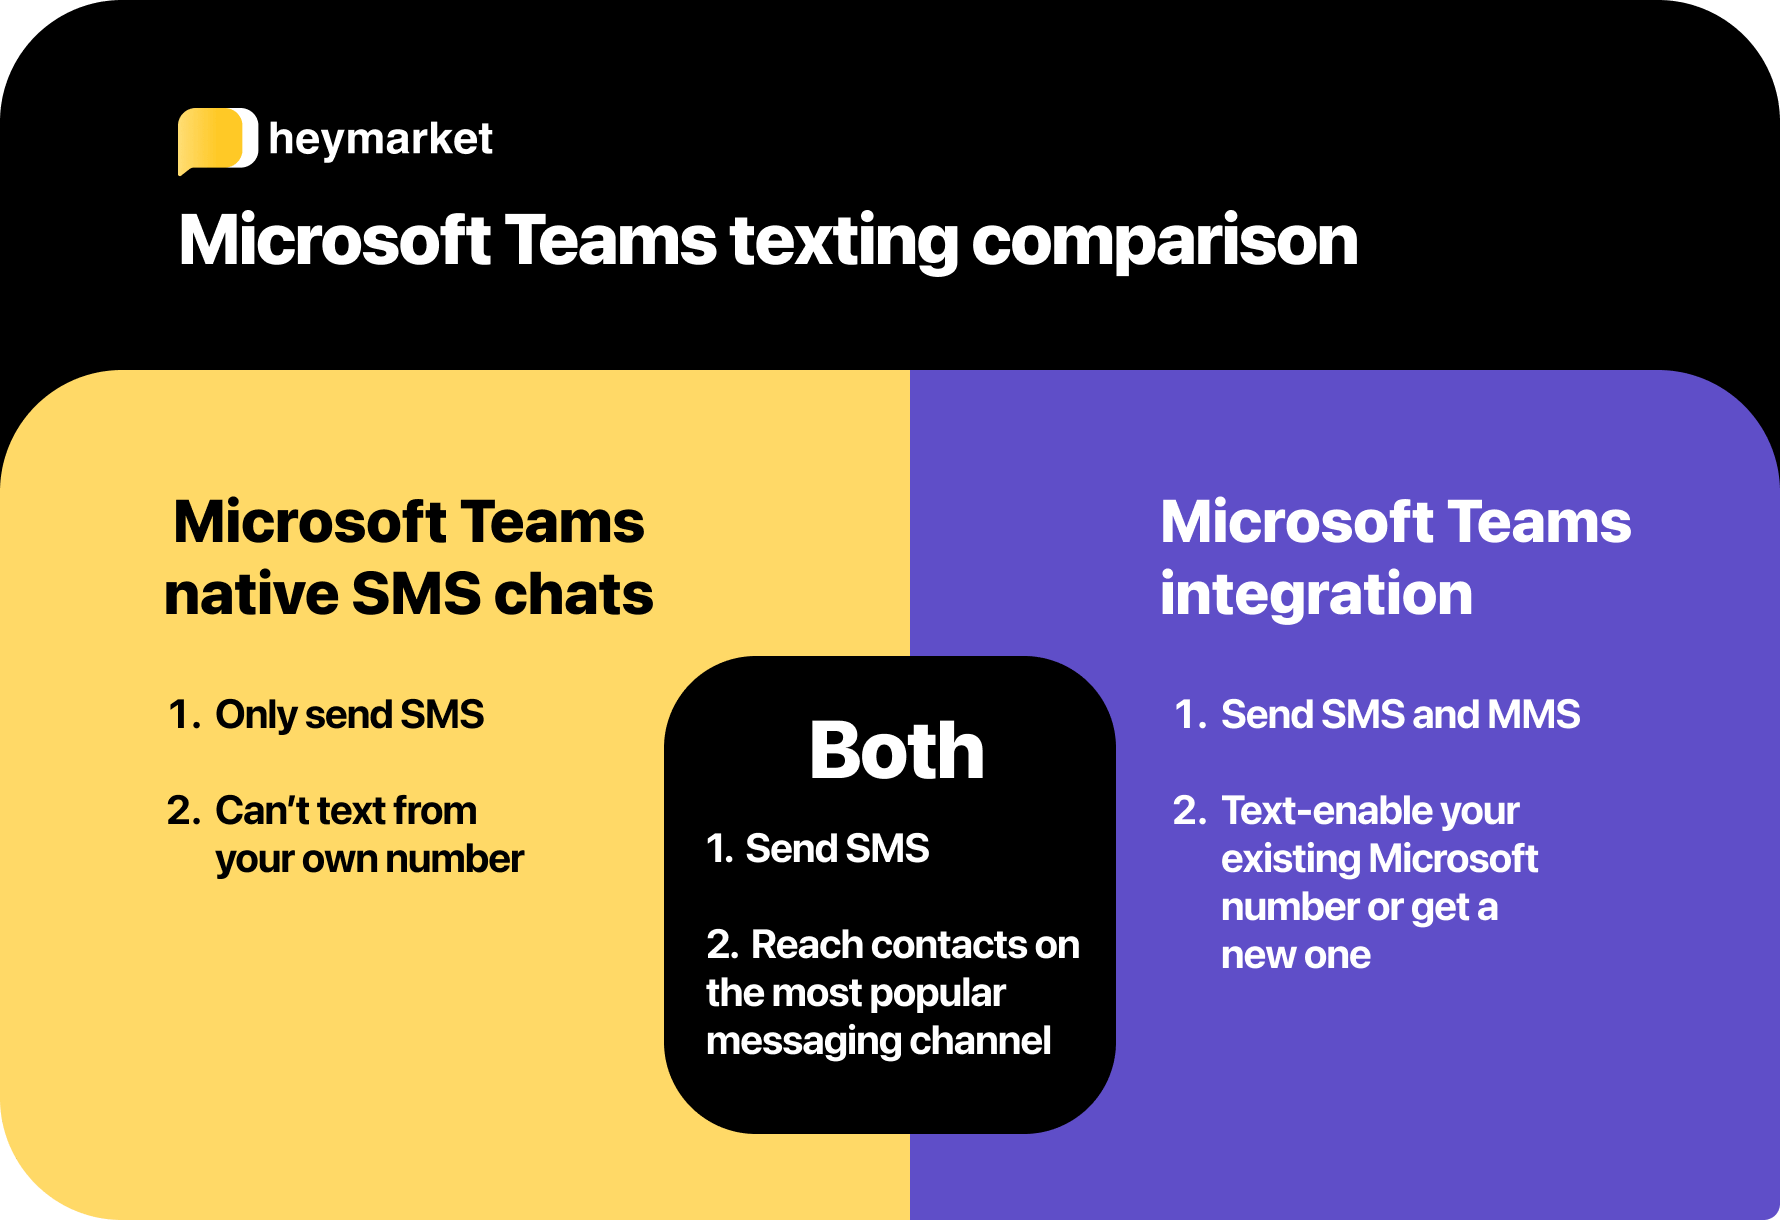 Microsoft Teams texting comparison: Microsoft Teams native SMS chats vs Microsoft Teams integration.